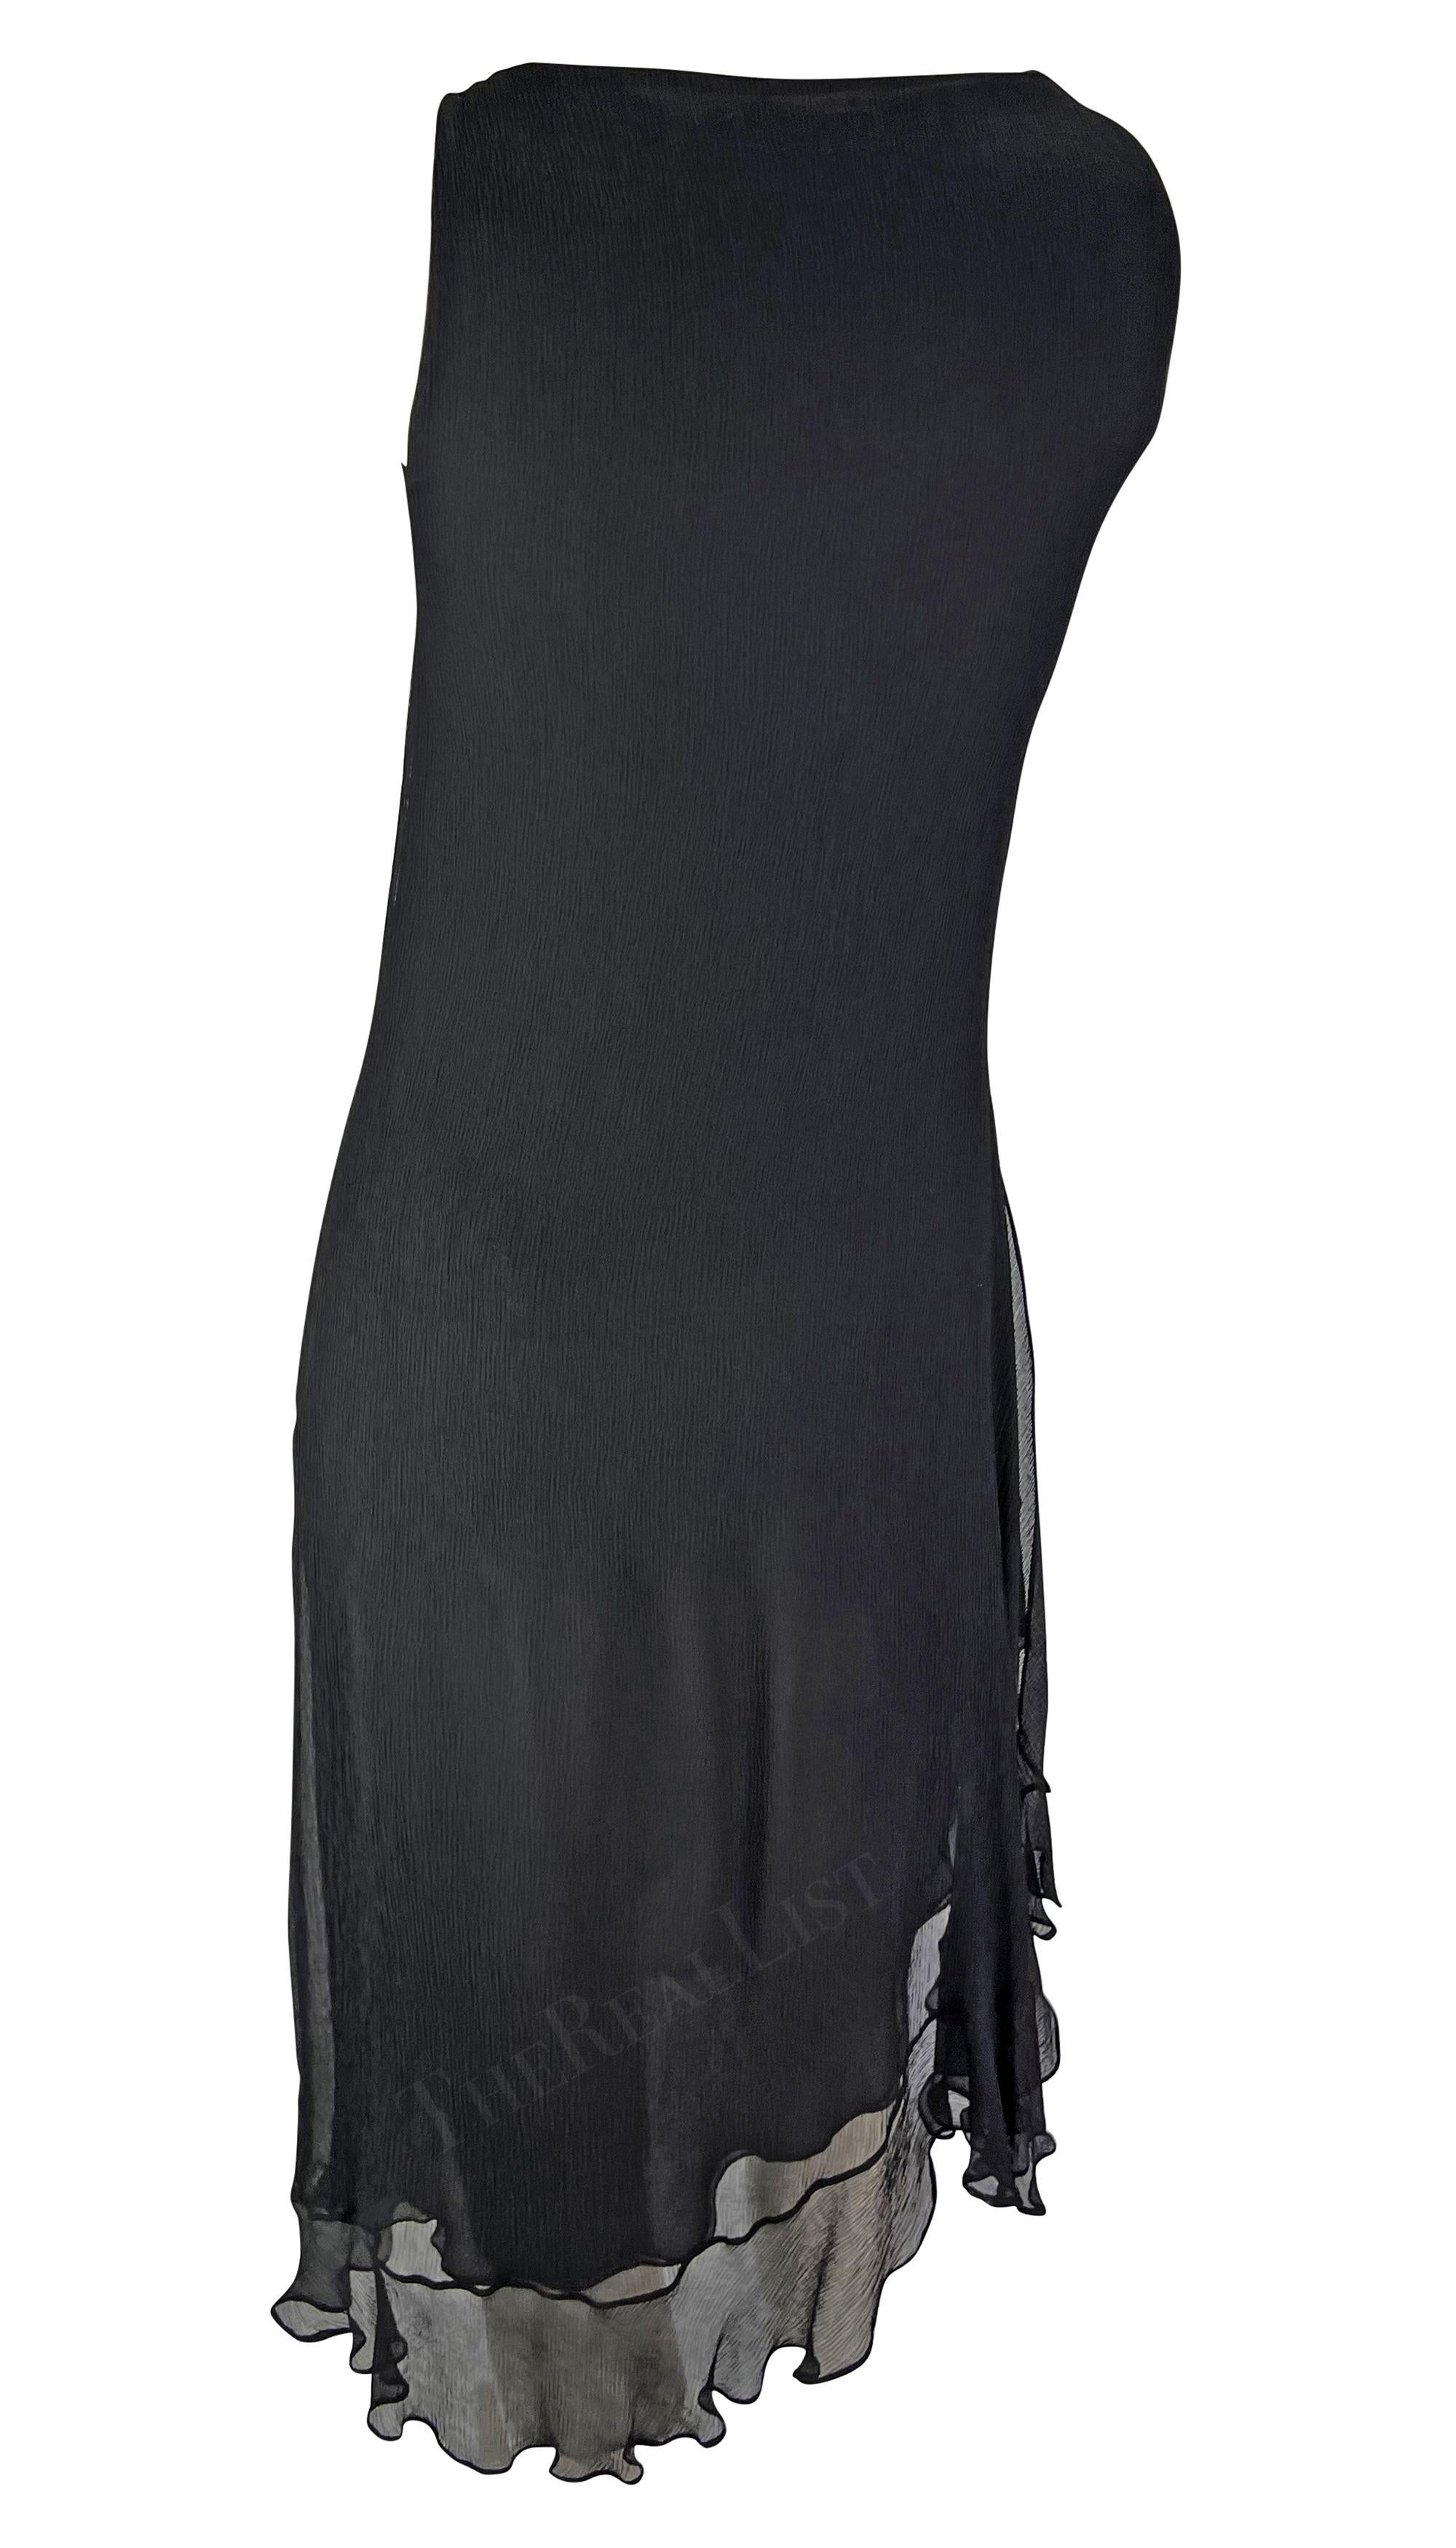 Women's or Men's S/S 2000 Gucci by Tom Ford Black Crepe Silk Chiffon Ruffle Dress